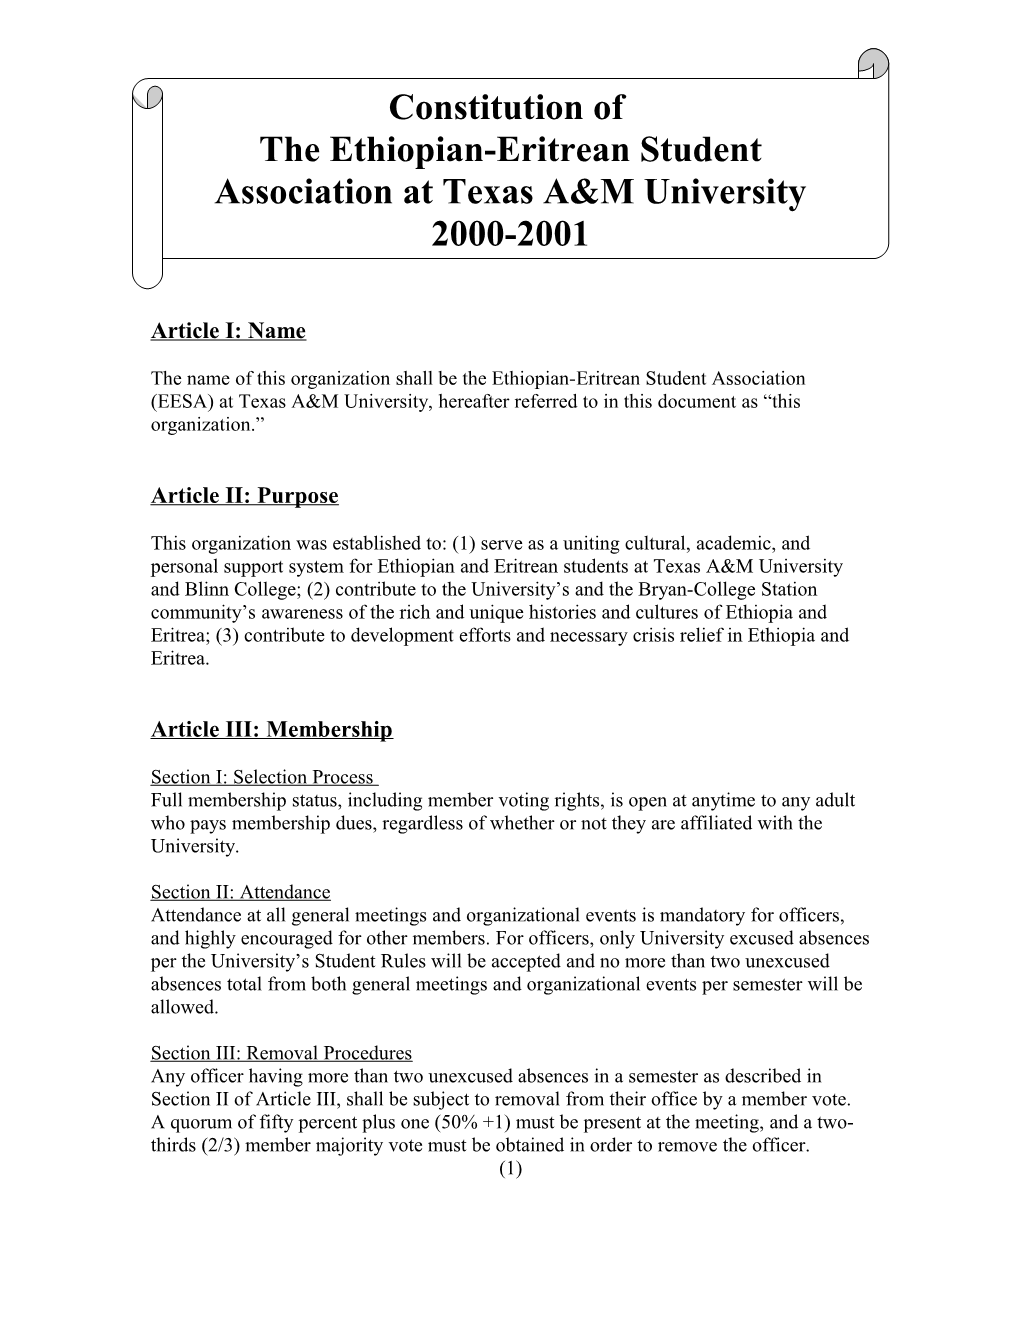 Constitution of the Ethiopian-Eritrean Student Association at Texas A&M University